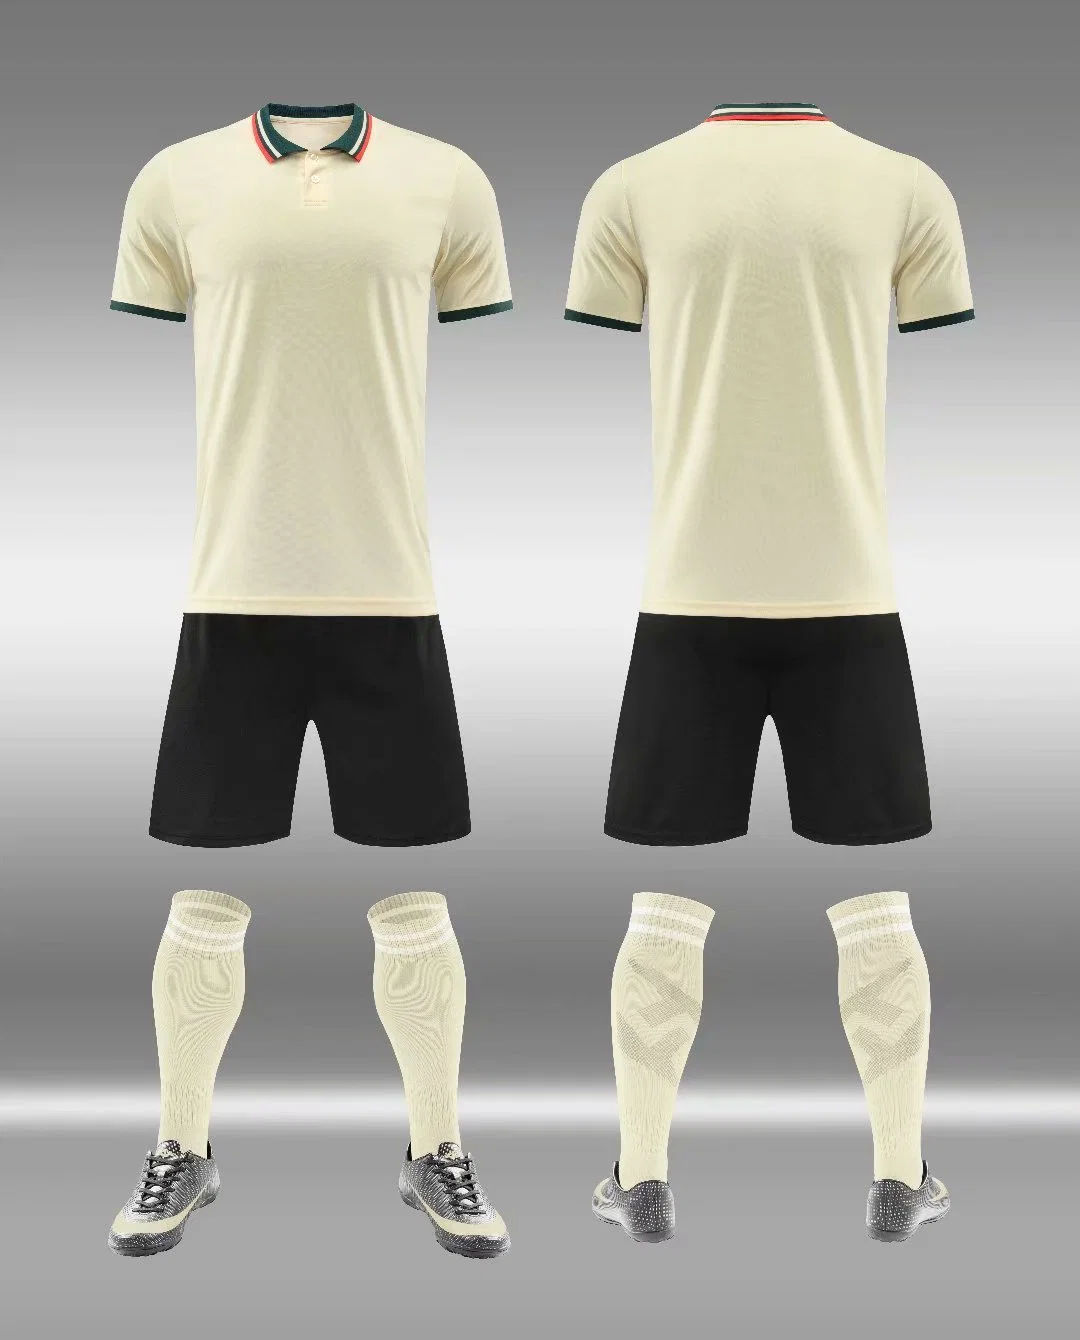 New Design Jugend Sport Tragen Fußball Uniform Männer Fußballtrikot Set Kinder Fußballtrikot Großhandel Trainingsanzug Kleidung